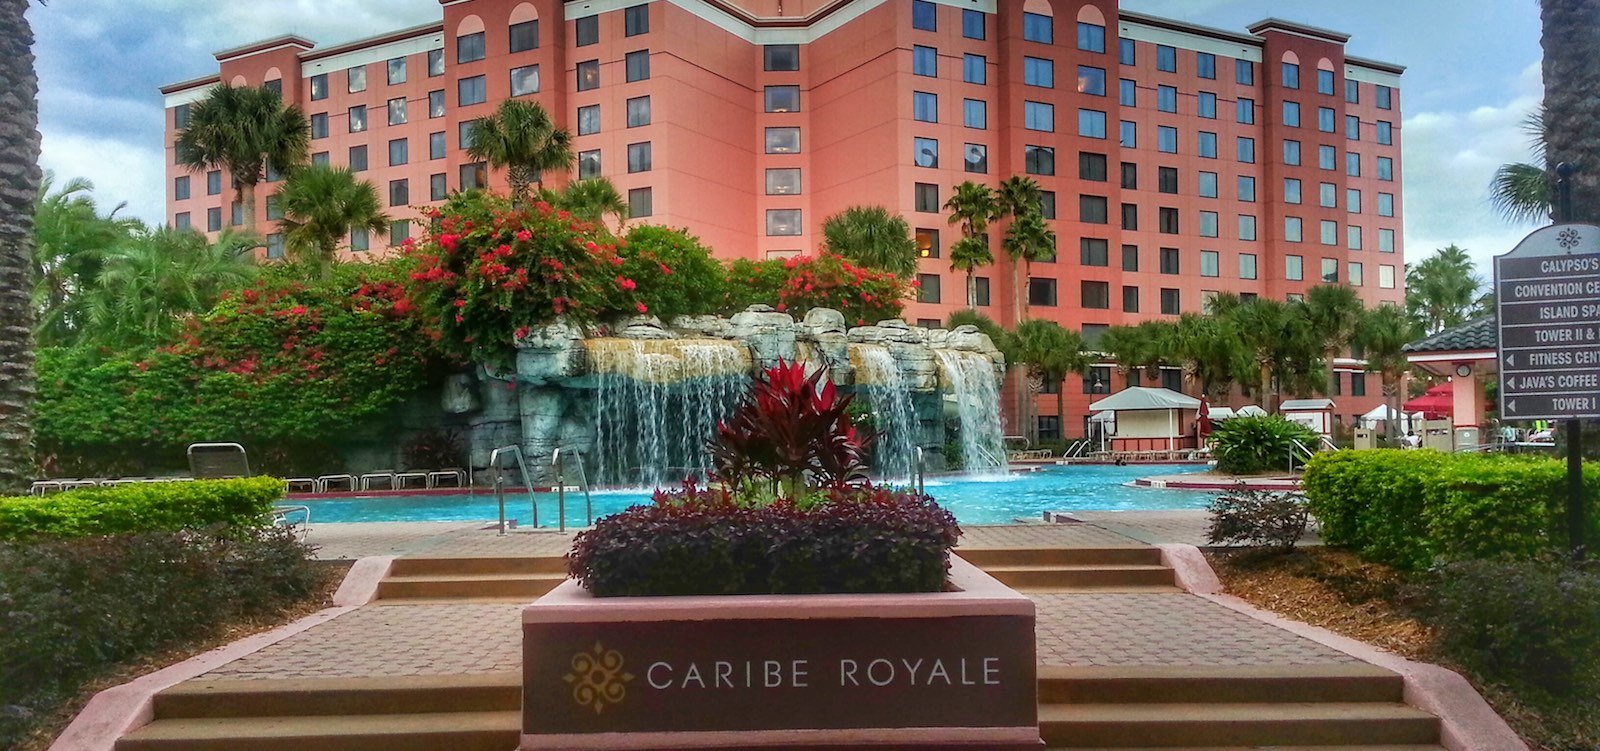 Caribe-Royale-Hotel-Review-Hero.jpg